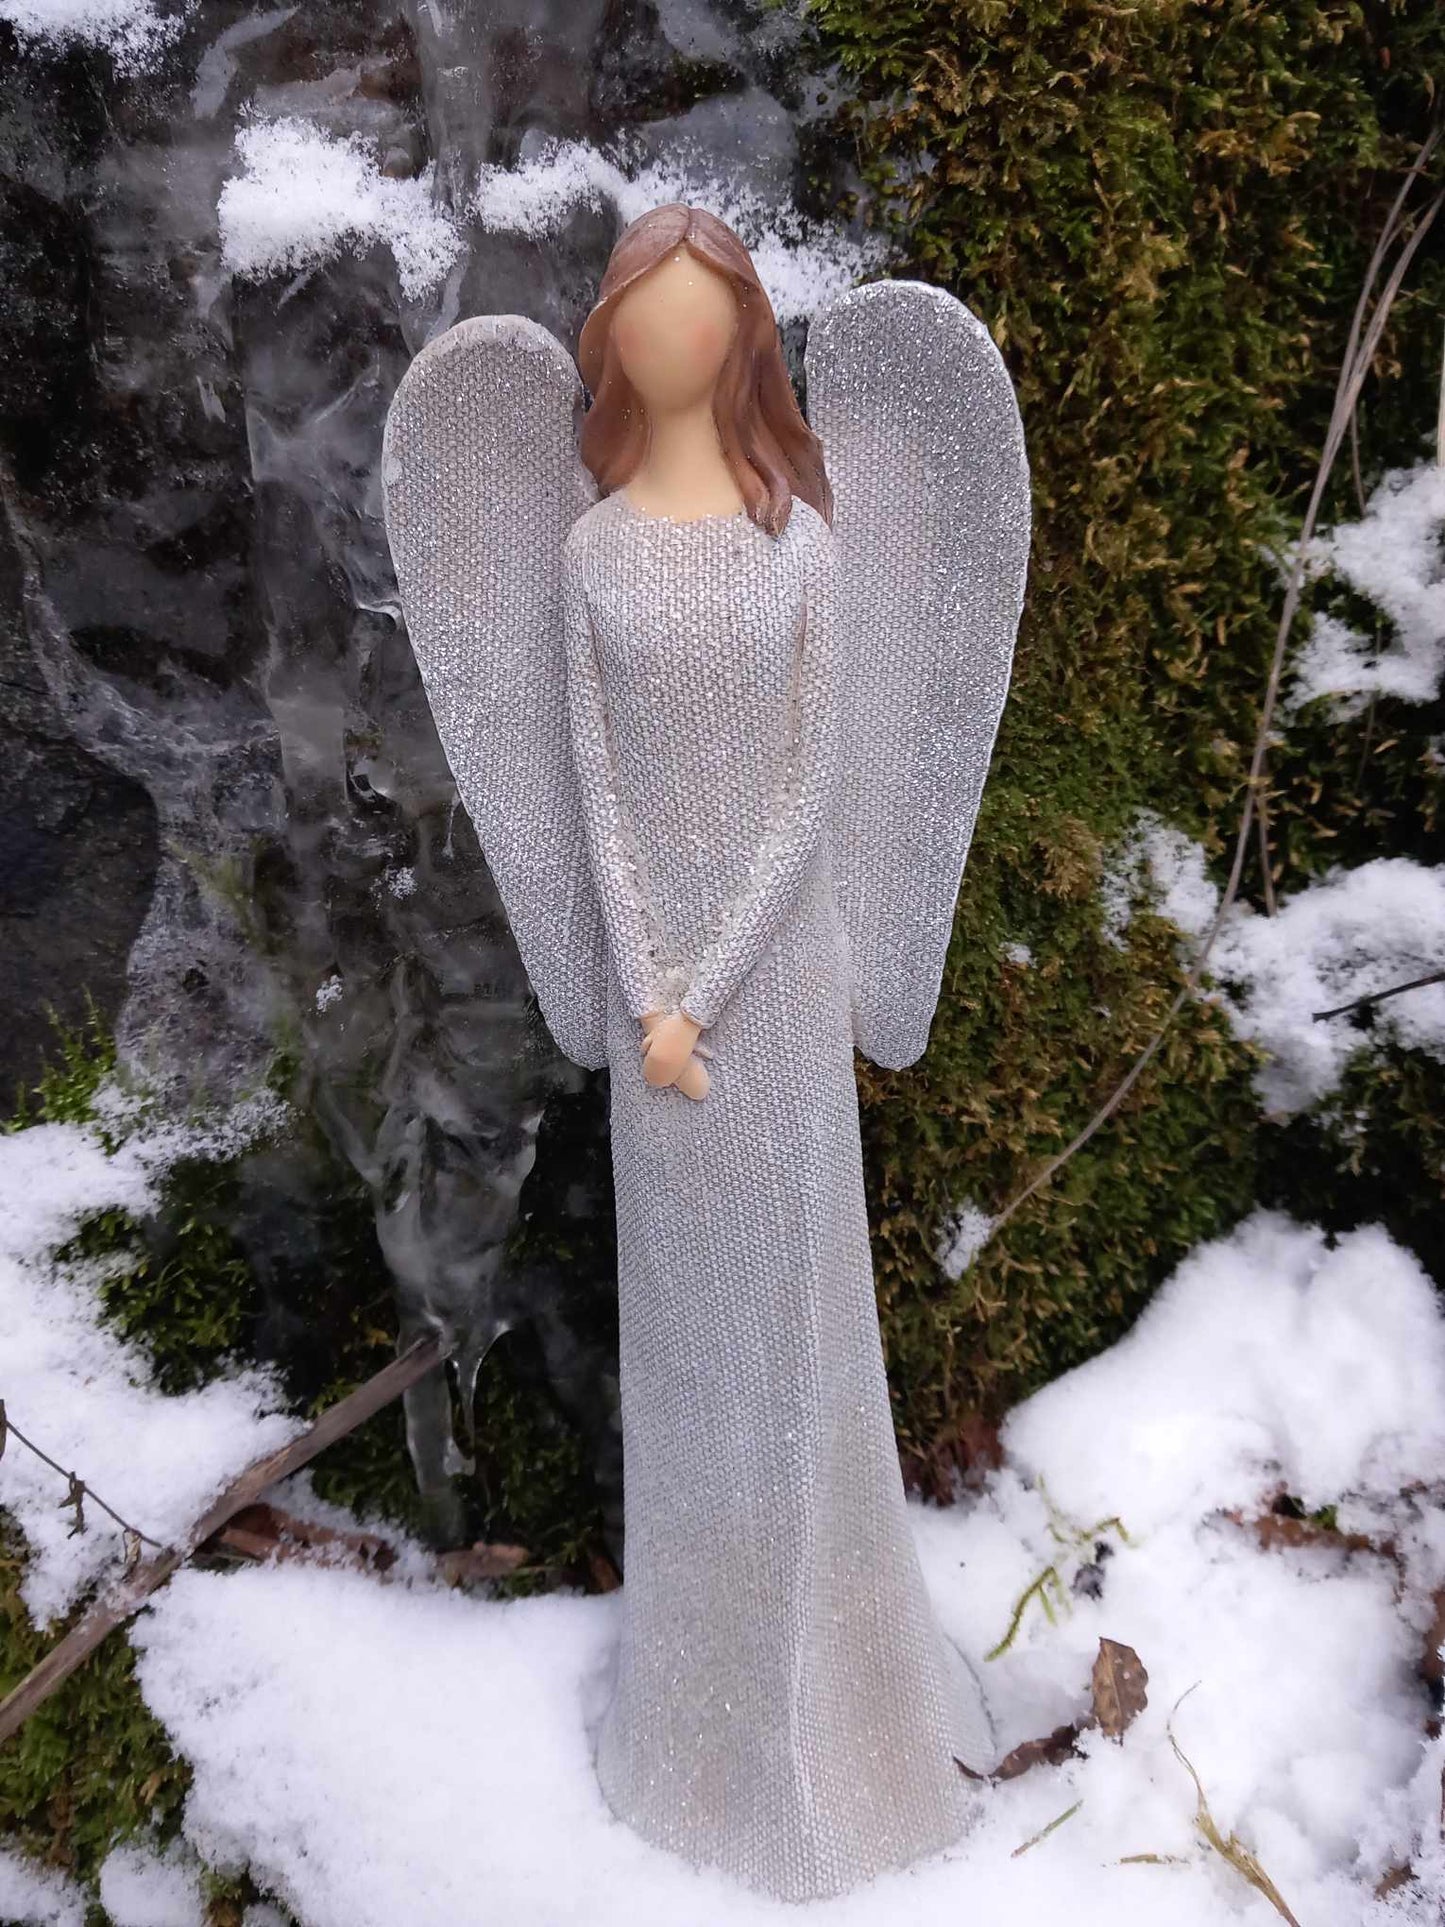 Aurora, håpets engel